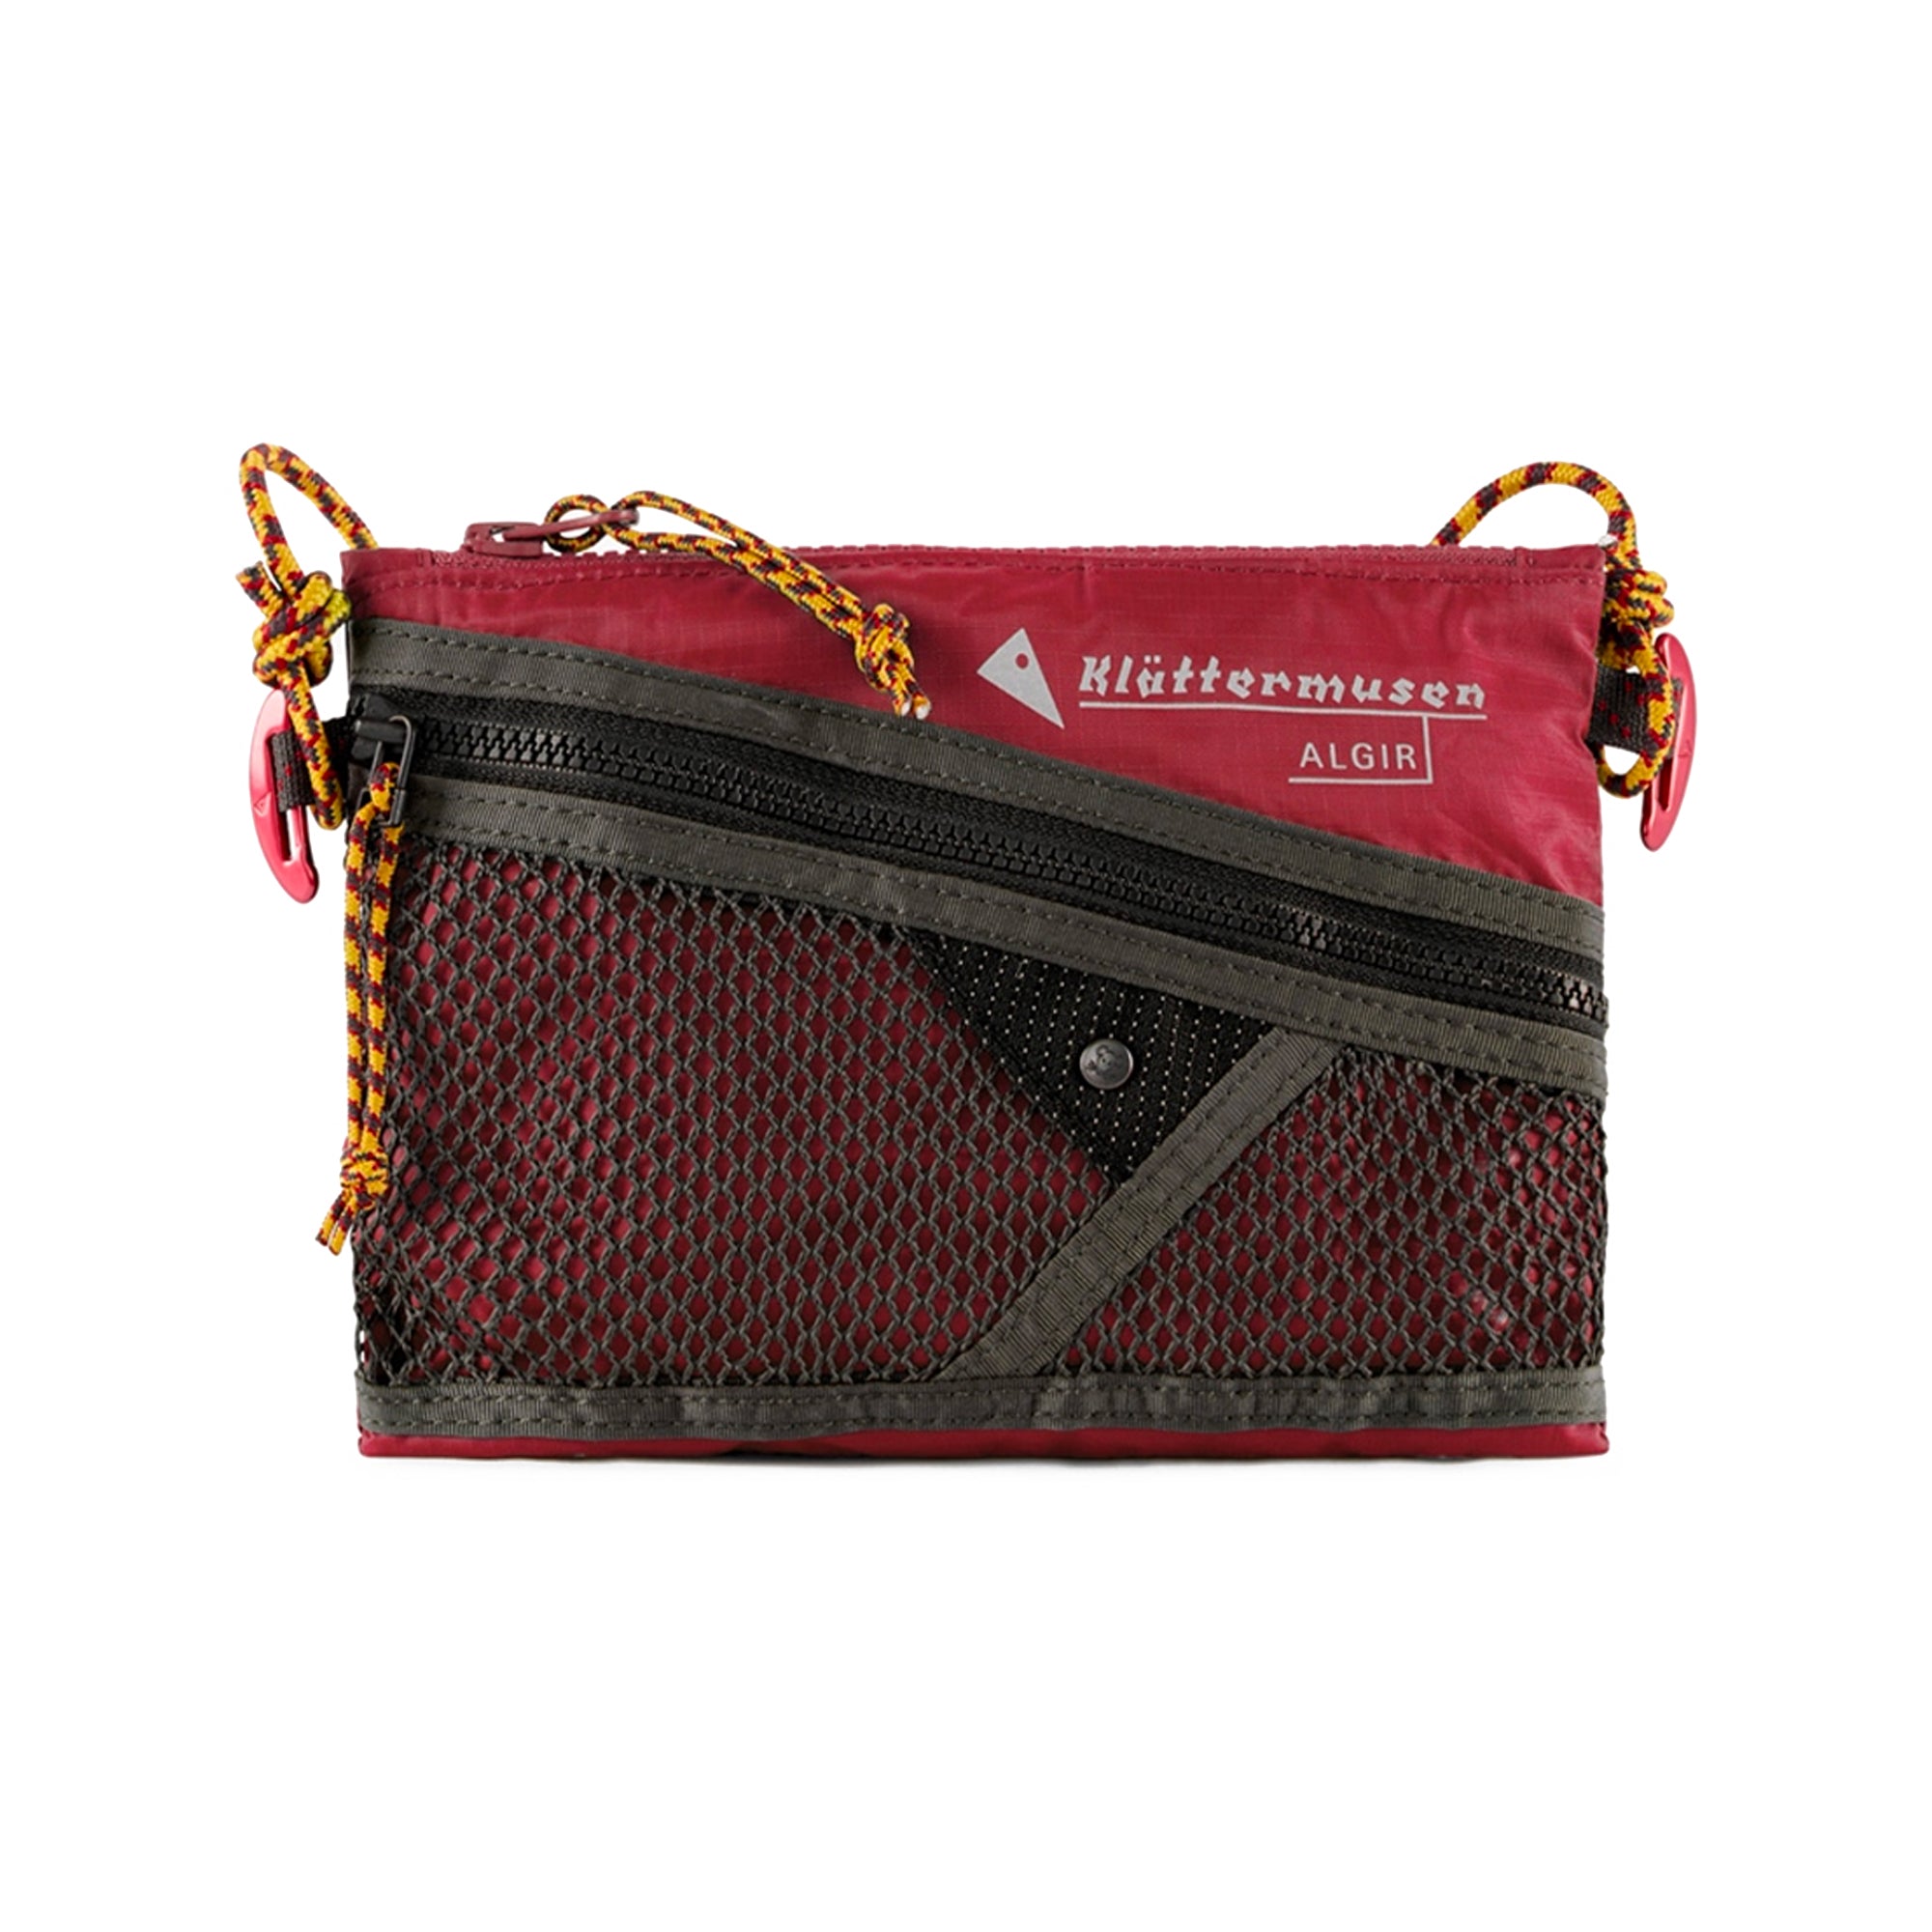 Klattermusen Algir Accessory Bag Small - Burnt Russet